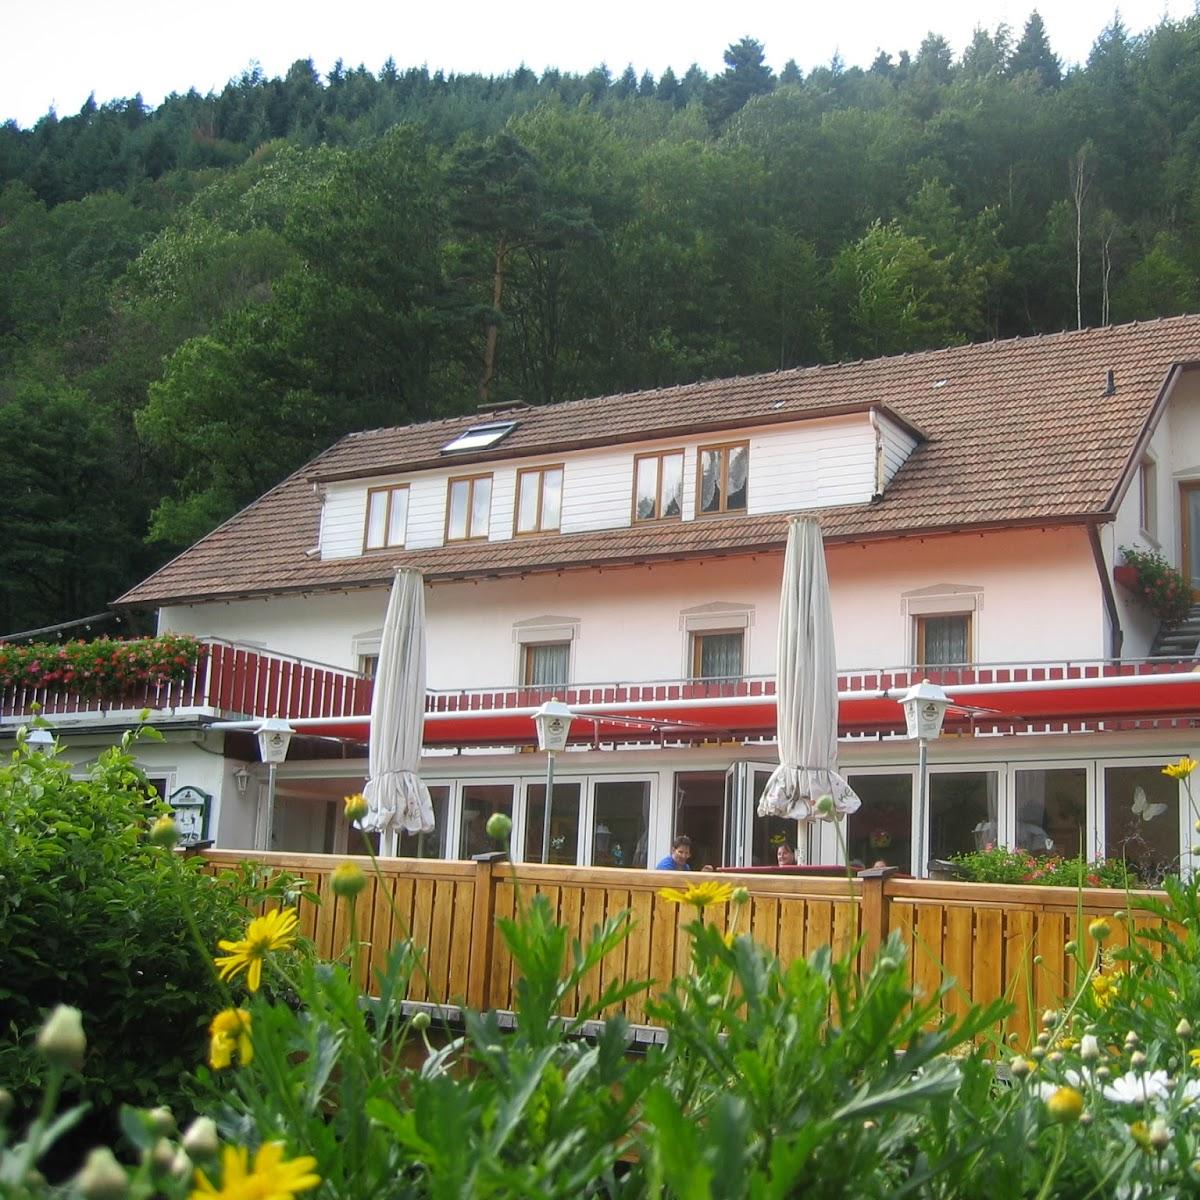 Restaurant "Café Schondelgrund - Roland Hajnal" in Hornberg